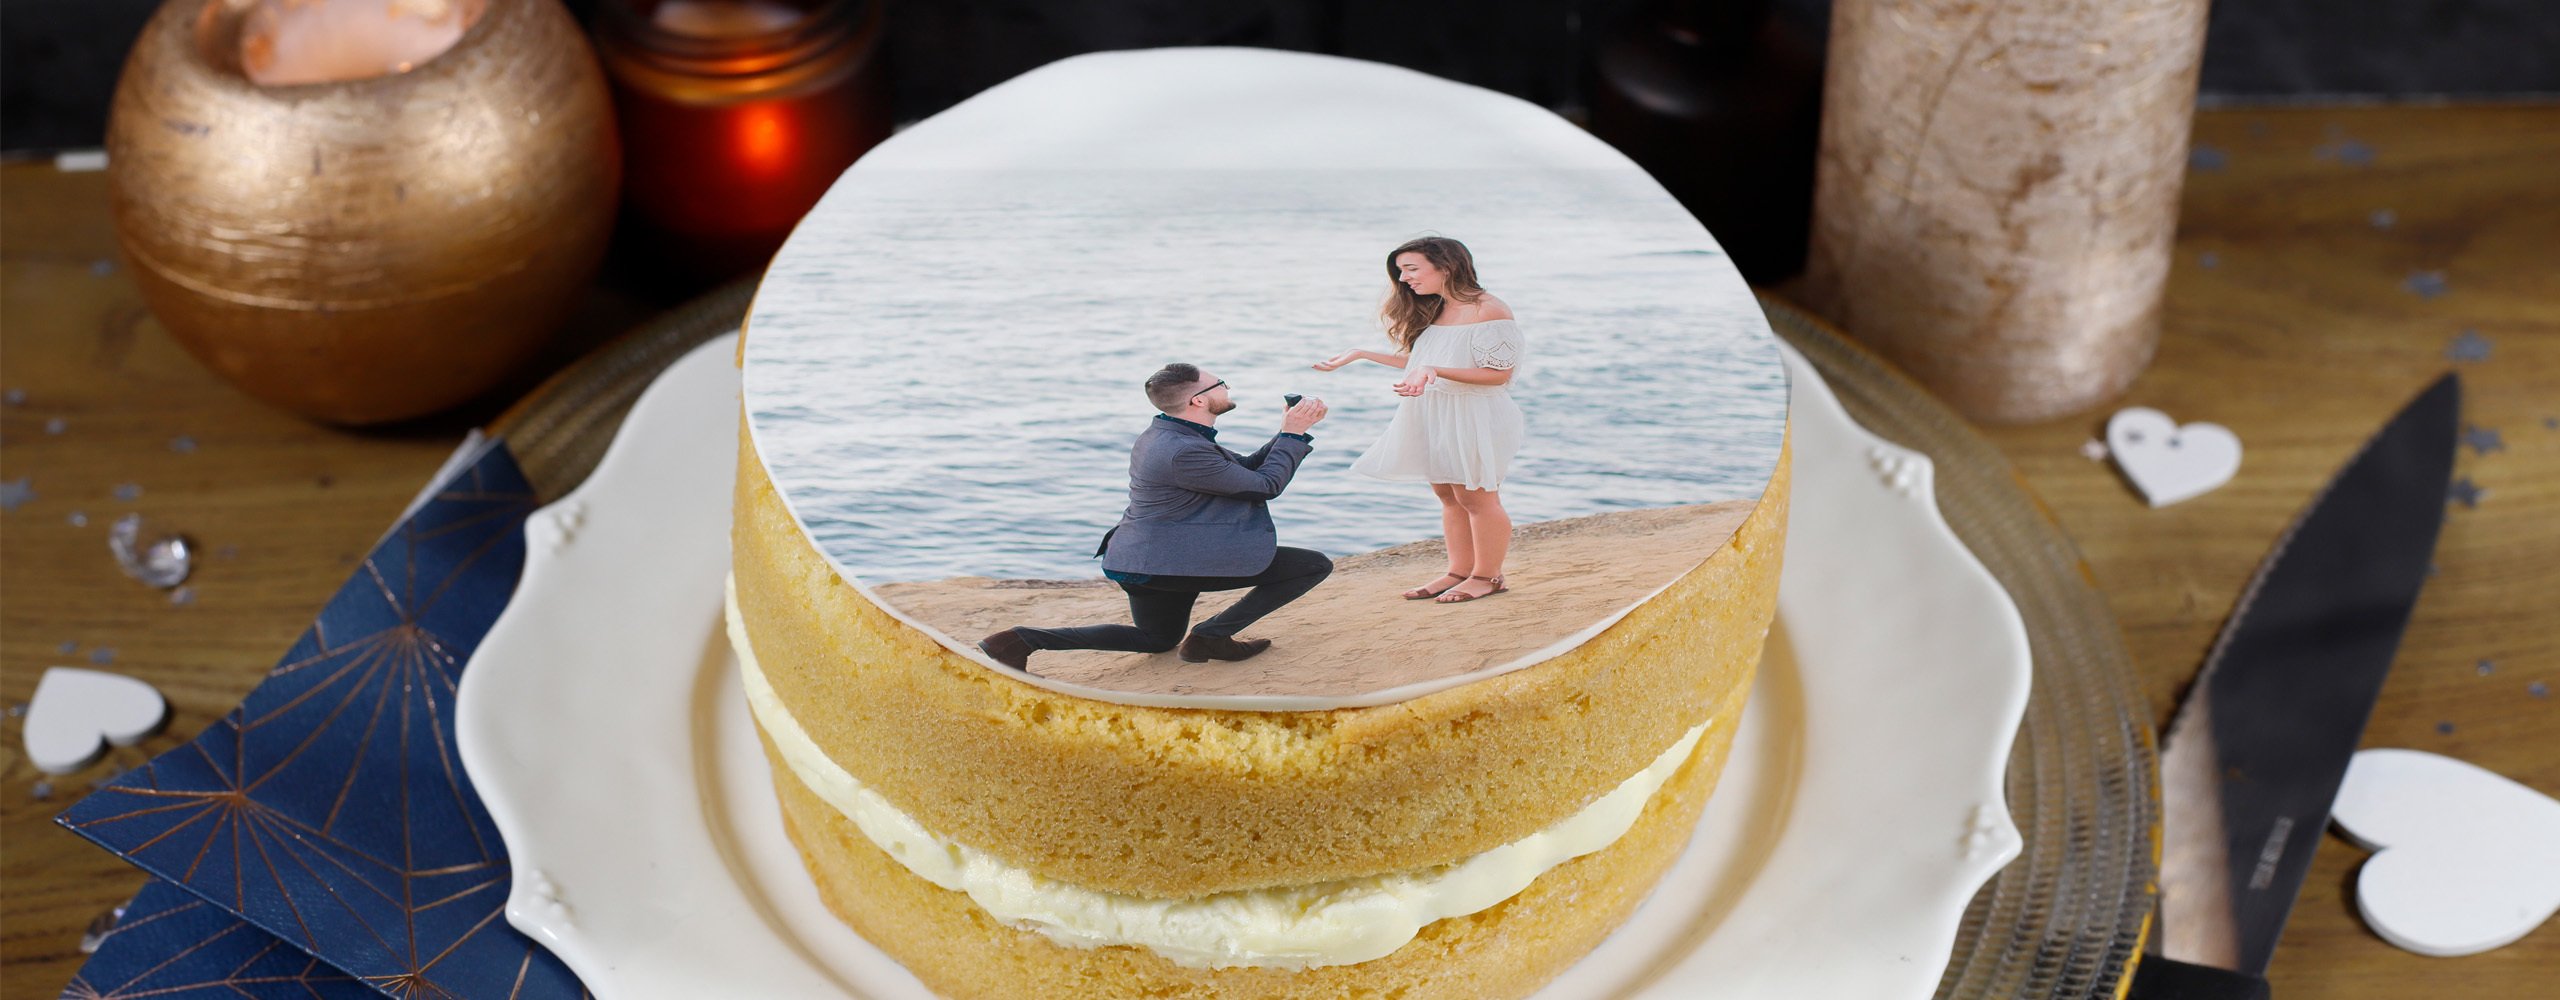 2 Tier Engagement Cake|Engagement cake| Couple cake | Marriage anniversary  Cake| cake online| Tfcake